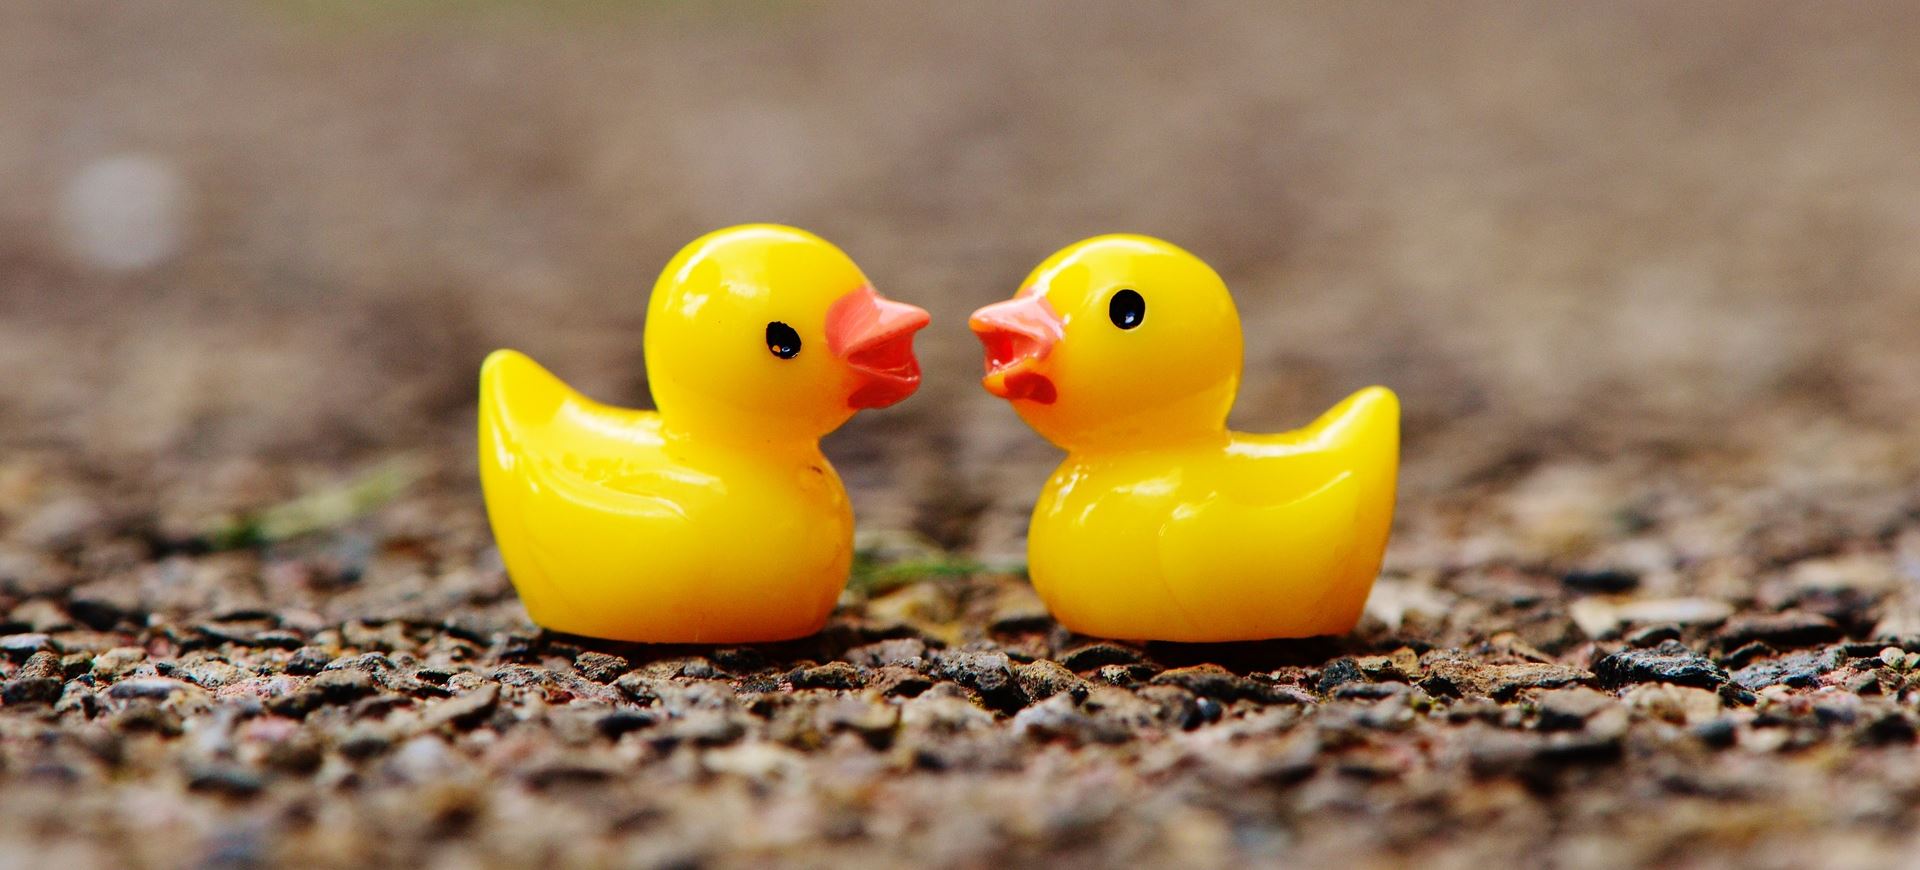 A pair of ducks, not programming